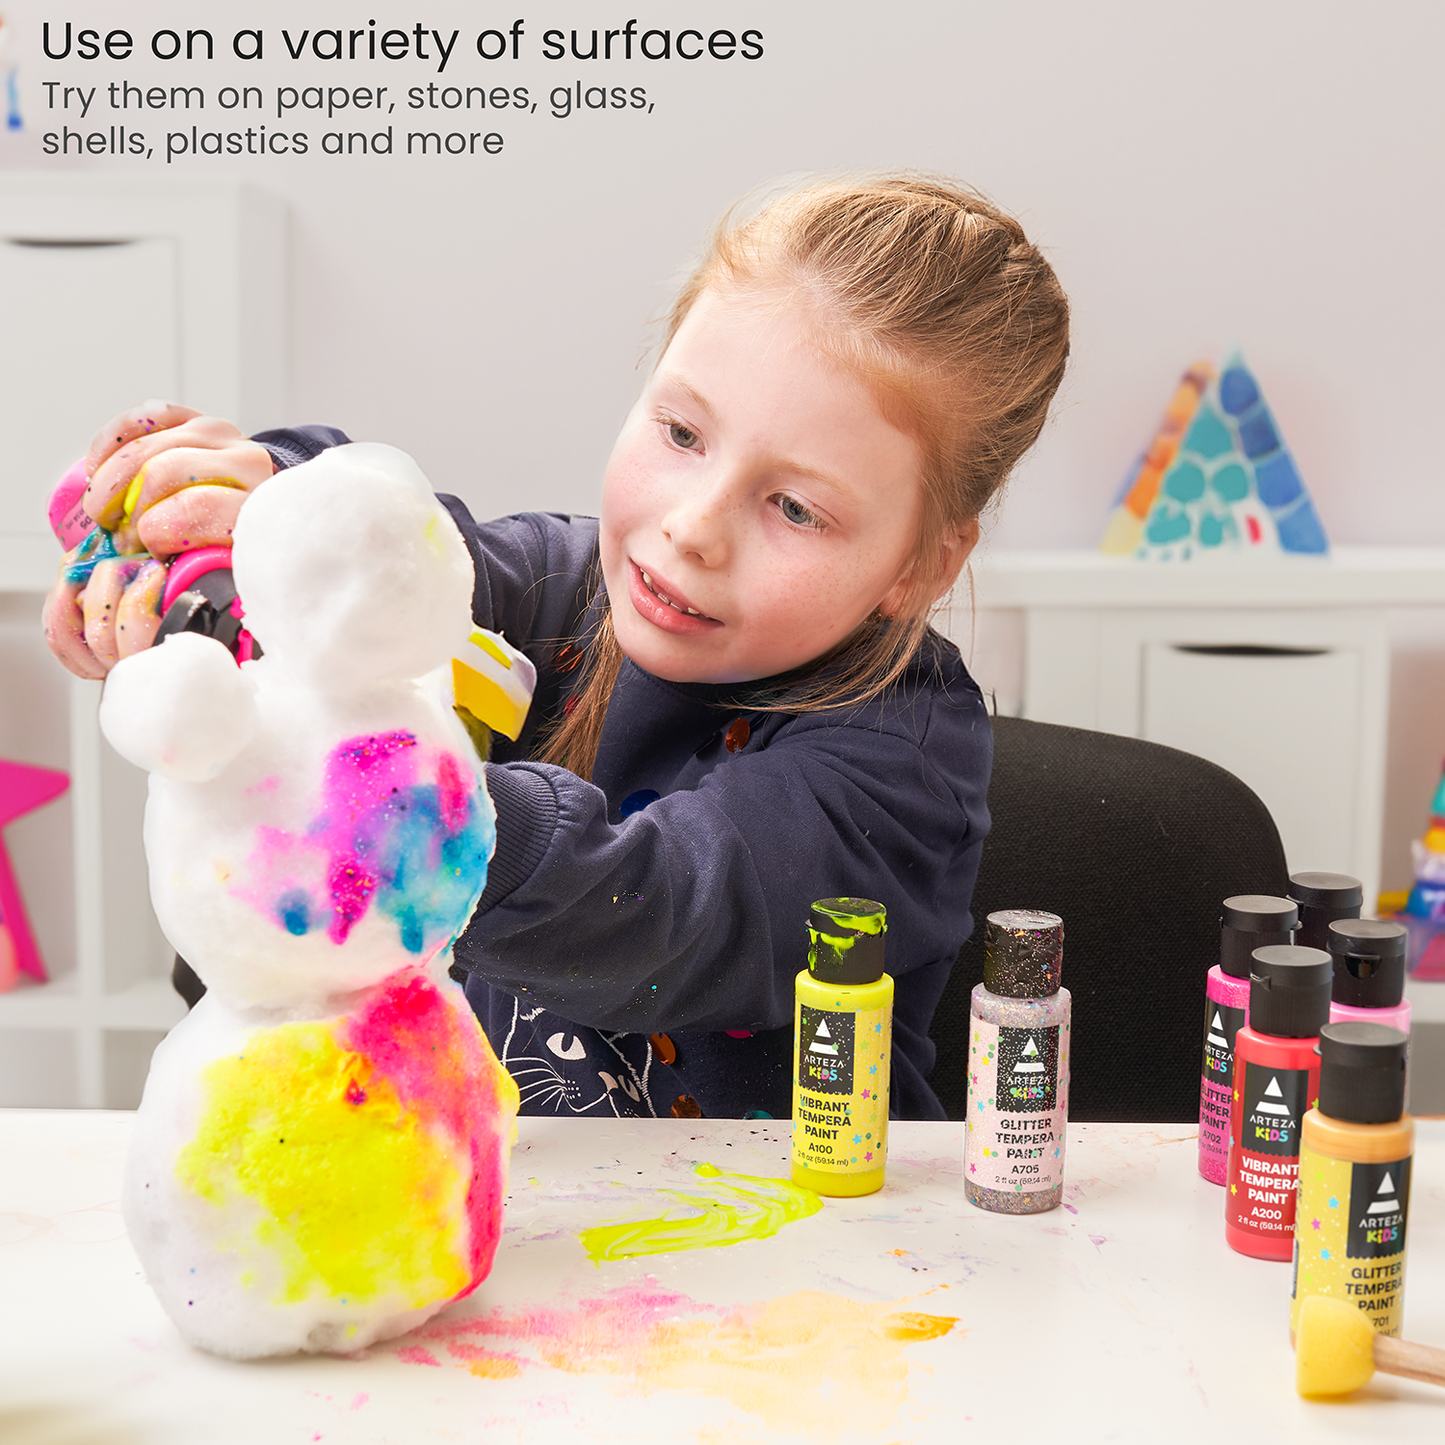 Kids Premium Tempera Paint, Assorted Colors, 2oz Bottles - Set of 32